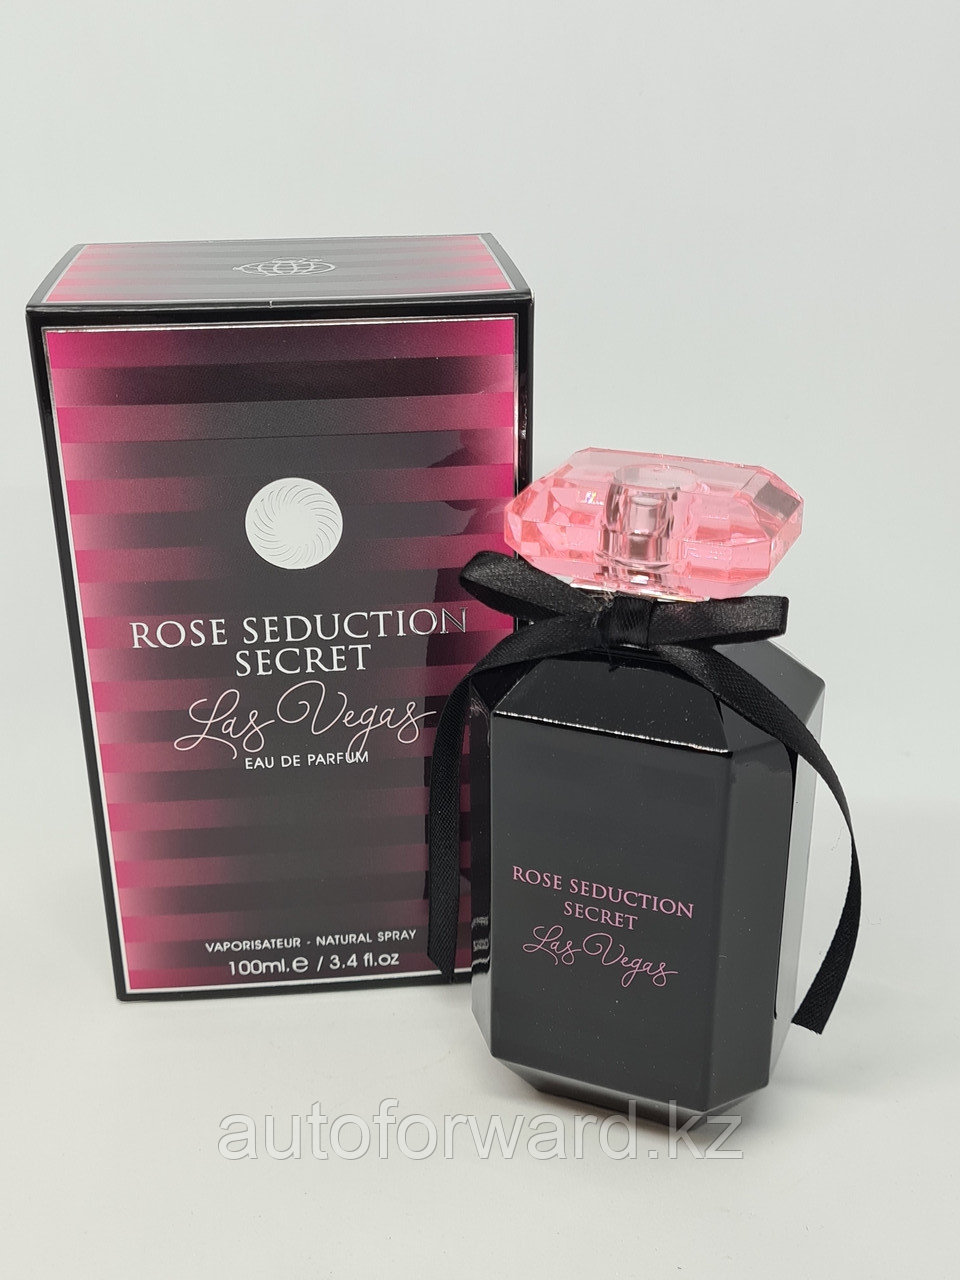 ОАЭ Парфюм Rose seduction secret Las Vegas (аромат Victoria's Secret Bombshell New York), 100 мл